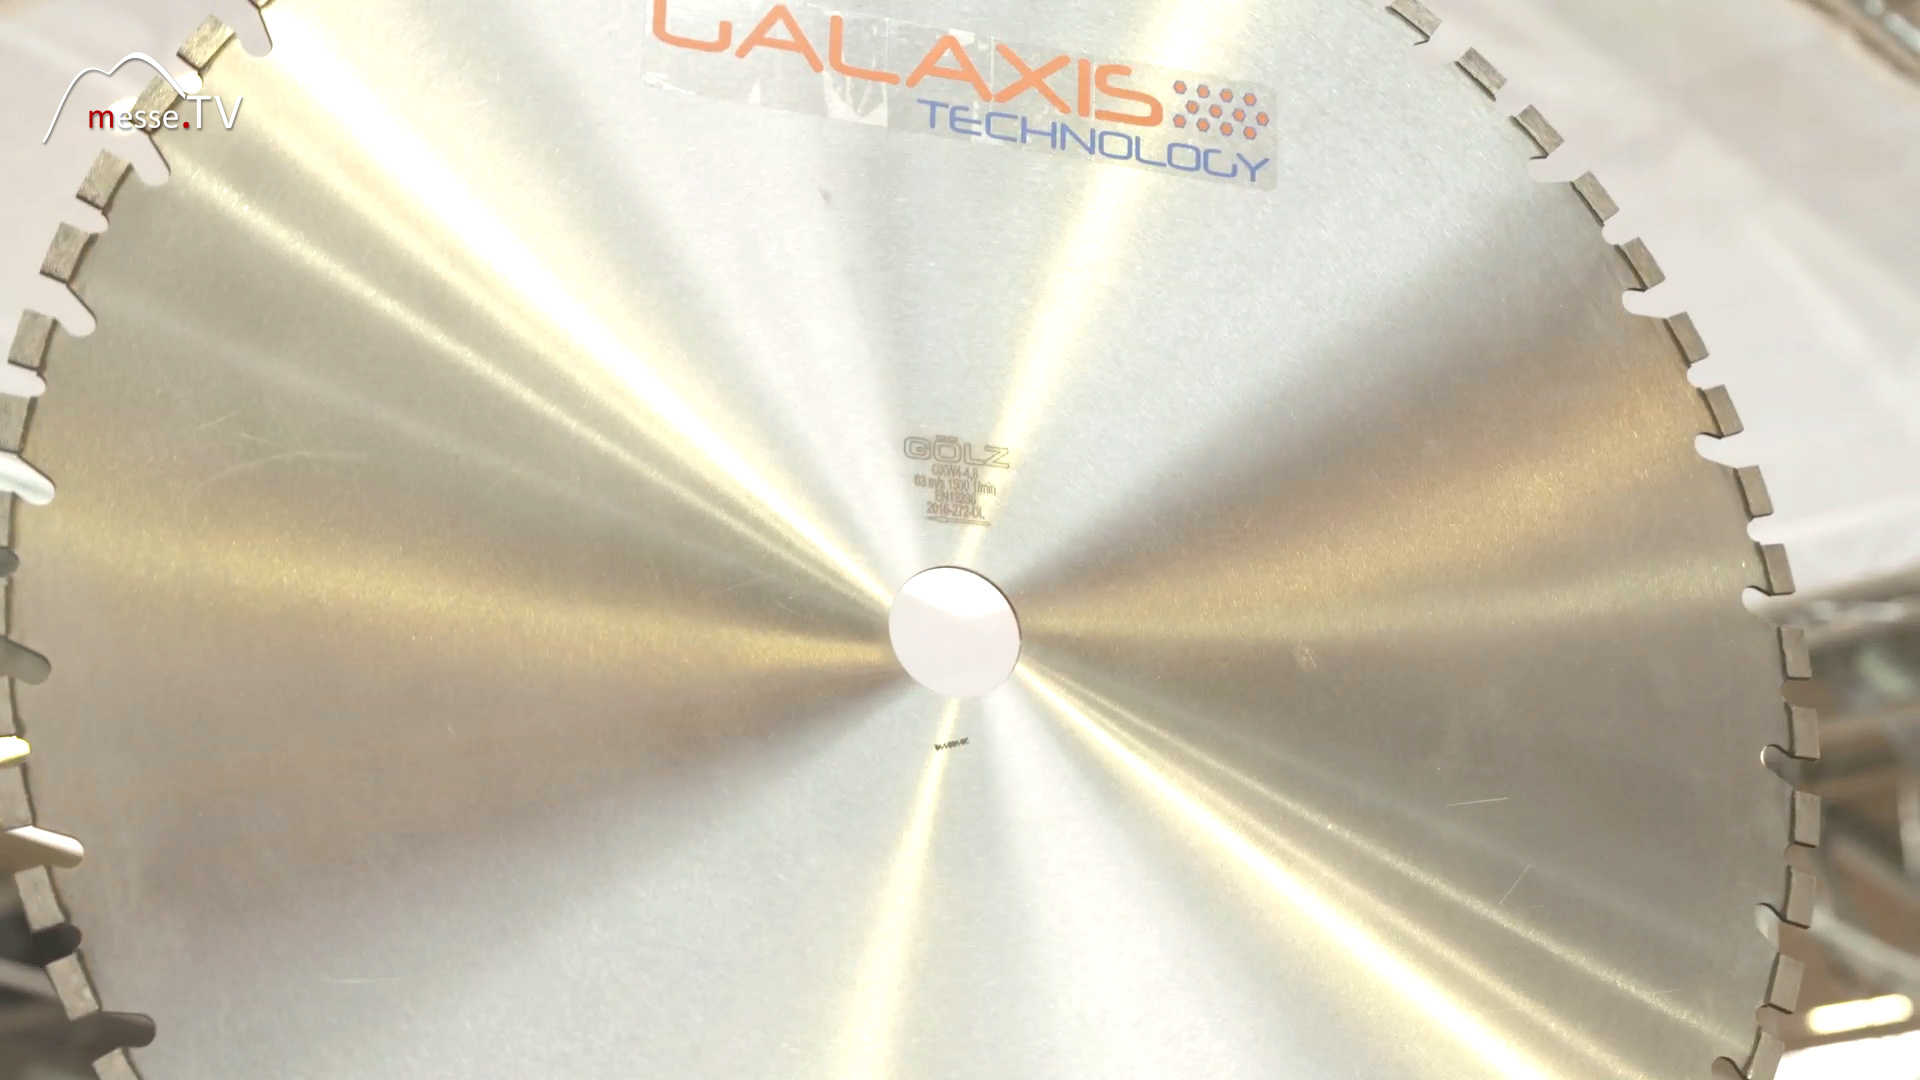 Goelz Galaxis Technology cutting disc bauma Munich